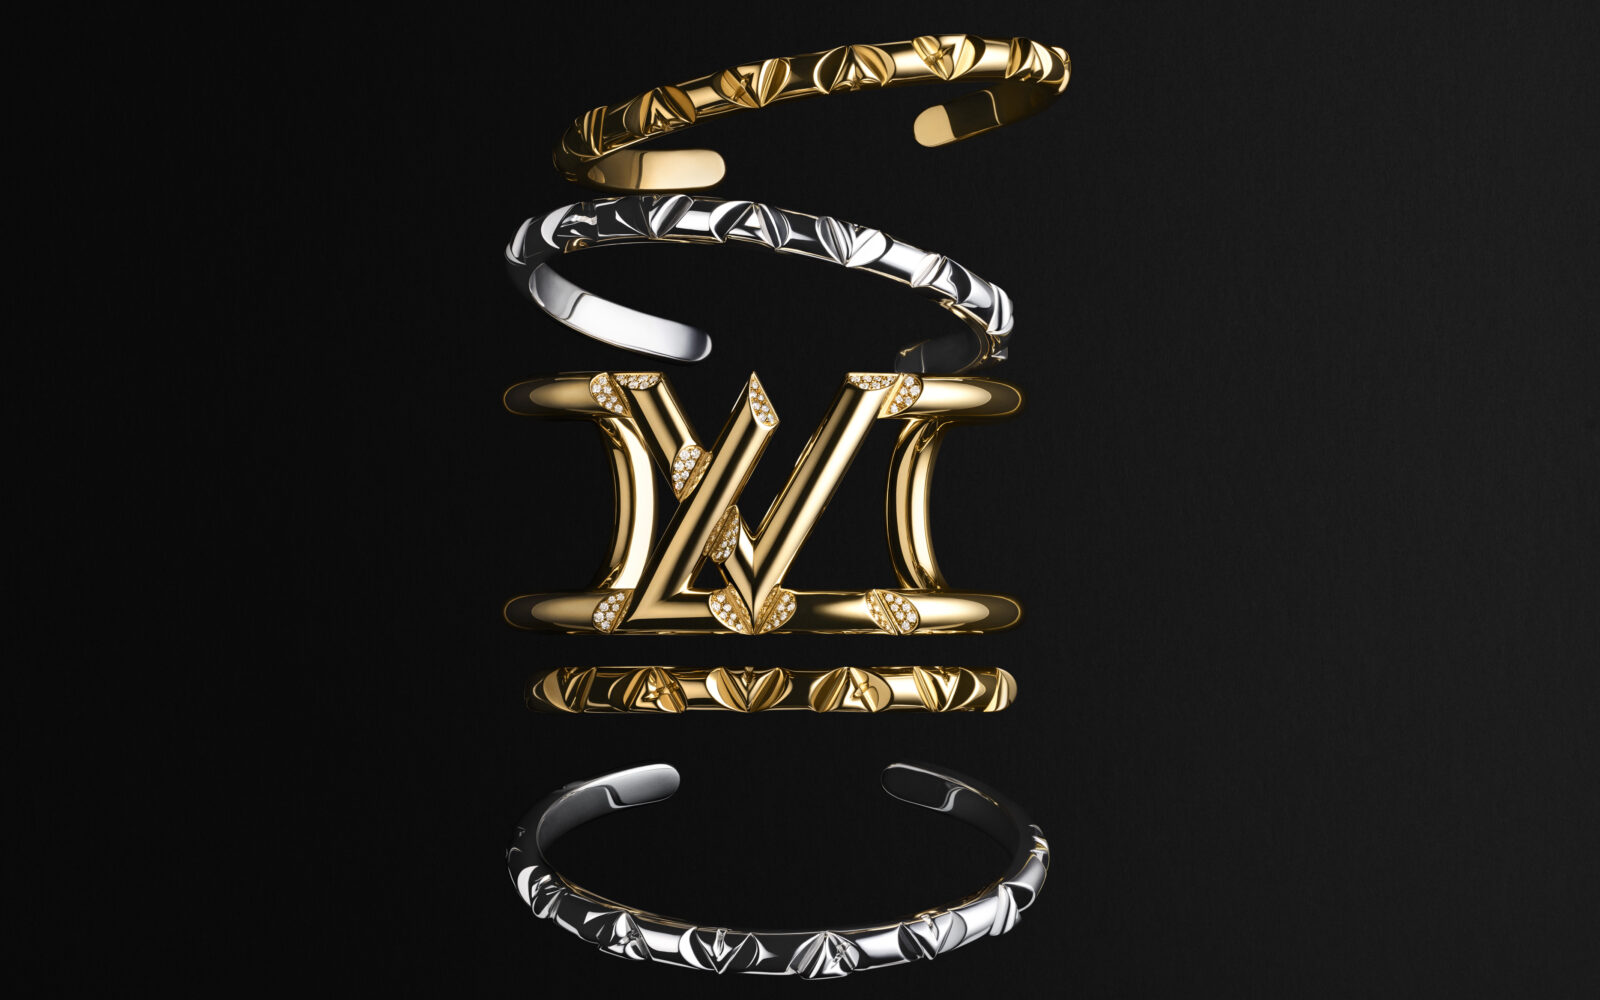 Louis Vuitton unveils new LV Volt jewelry collection